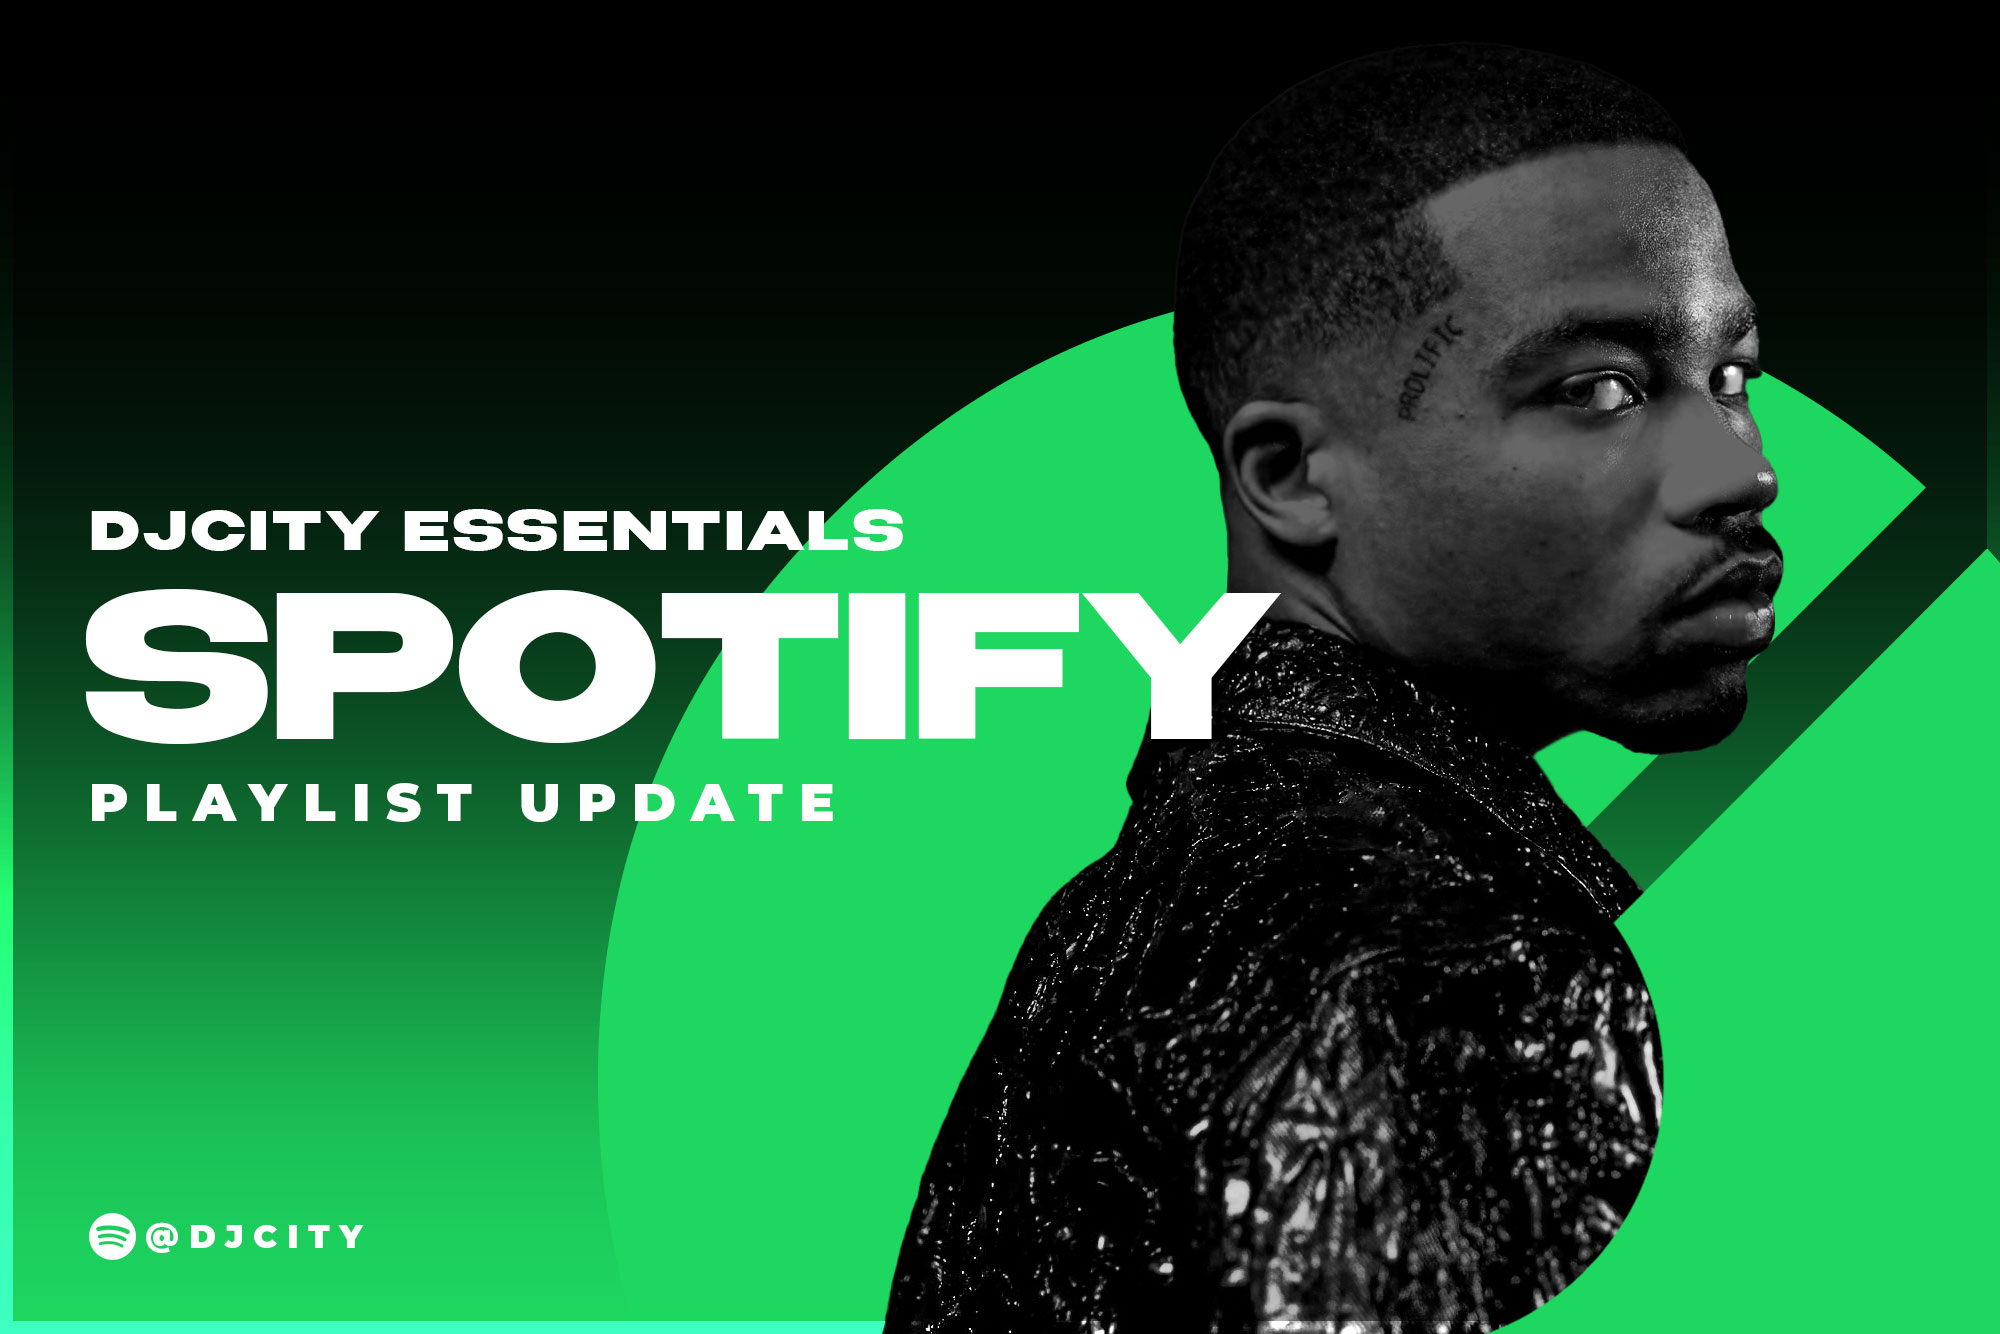 DJcity’s Spotify Playlist Update: Jun. 8